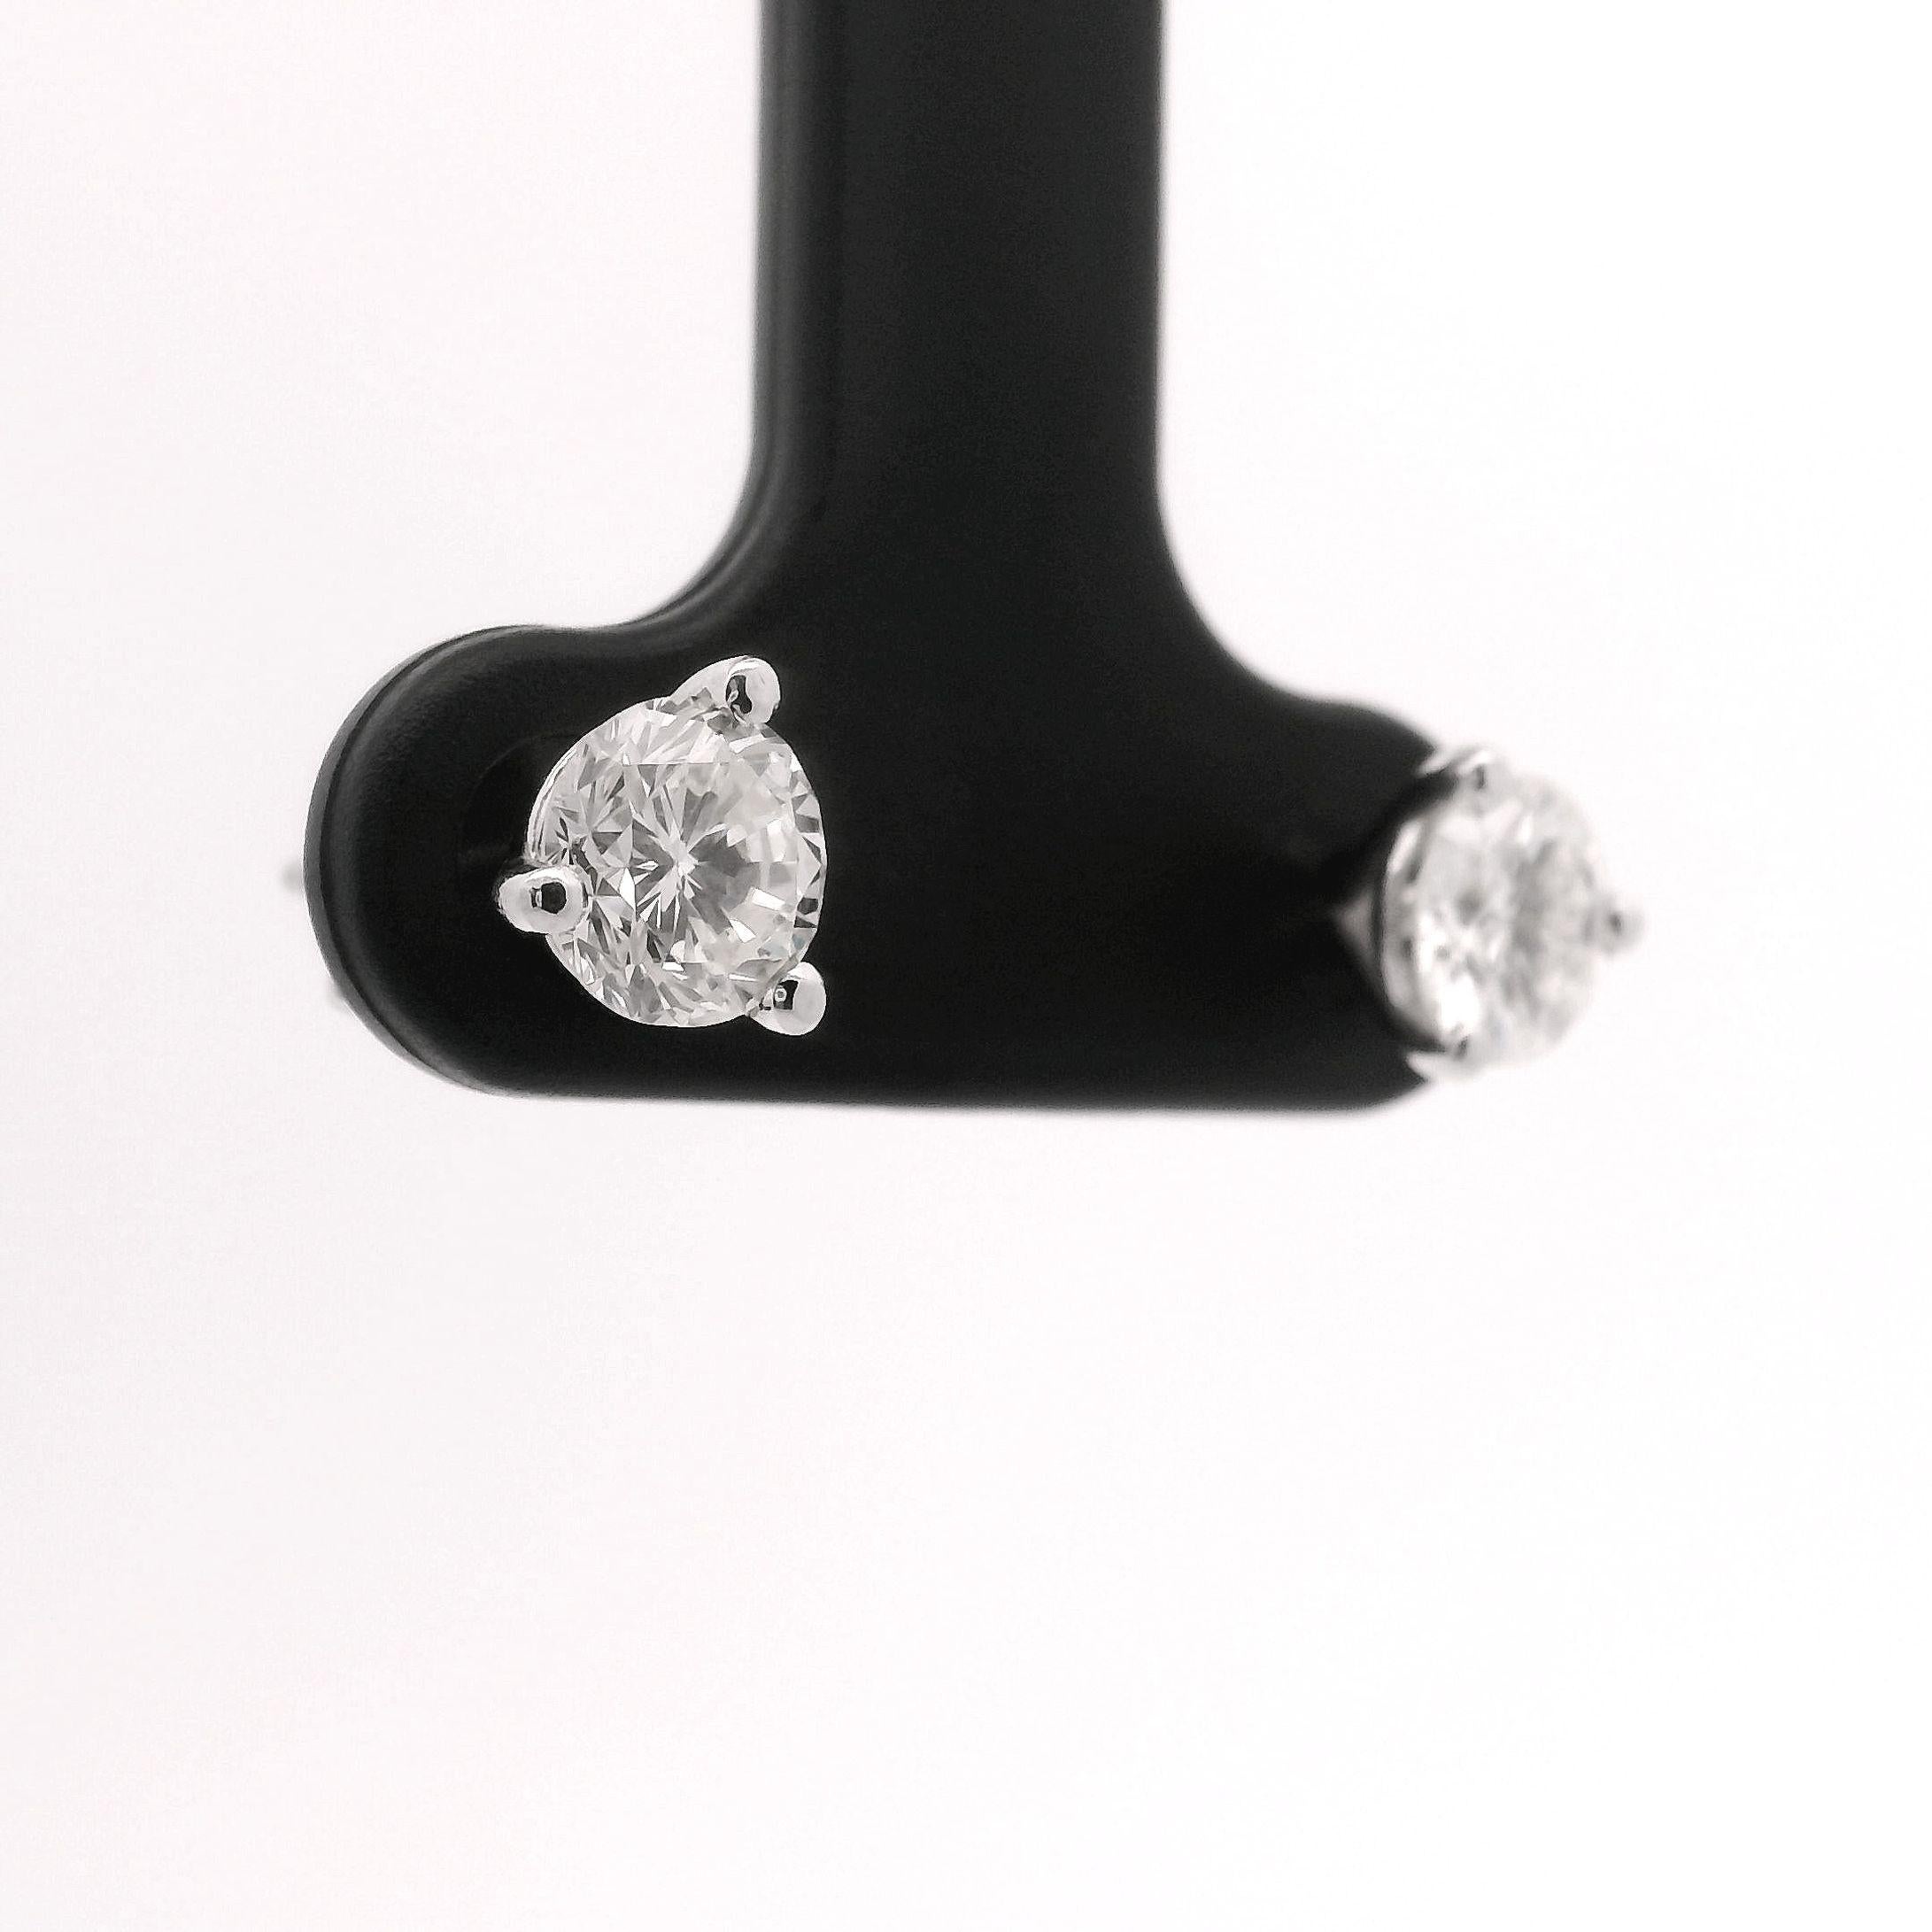 Condition:  Brand New
Metal:   14k White Gold
Diamonds:  Pair of Round Cut Natural Diamonds 1.2cttw
Diamond Color:  G
Diamond Clarity:  SI3-I1
Diamond Width:  5.3mm
Setting:  Martini
Backings:  Butterfly Push Backs
Markings:  